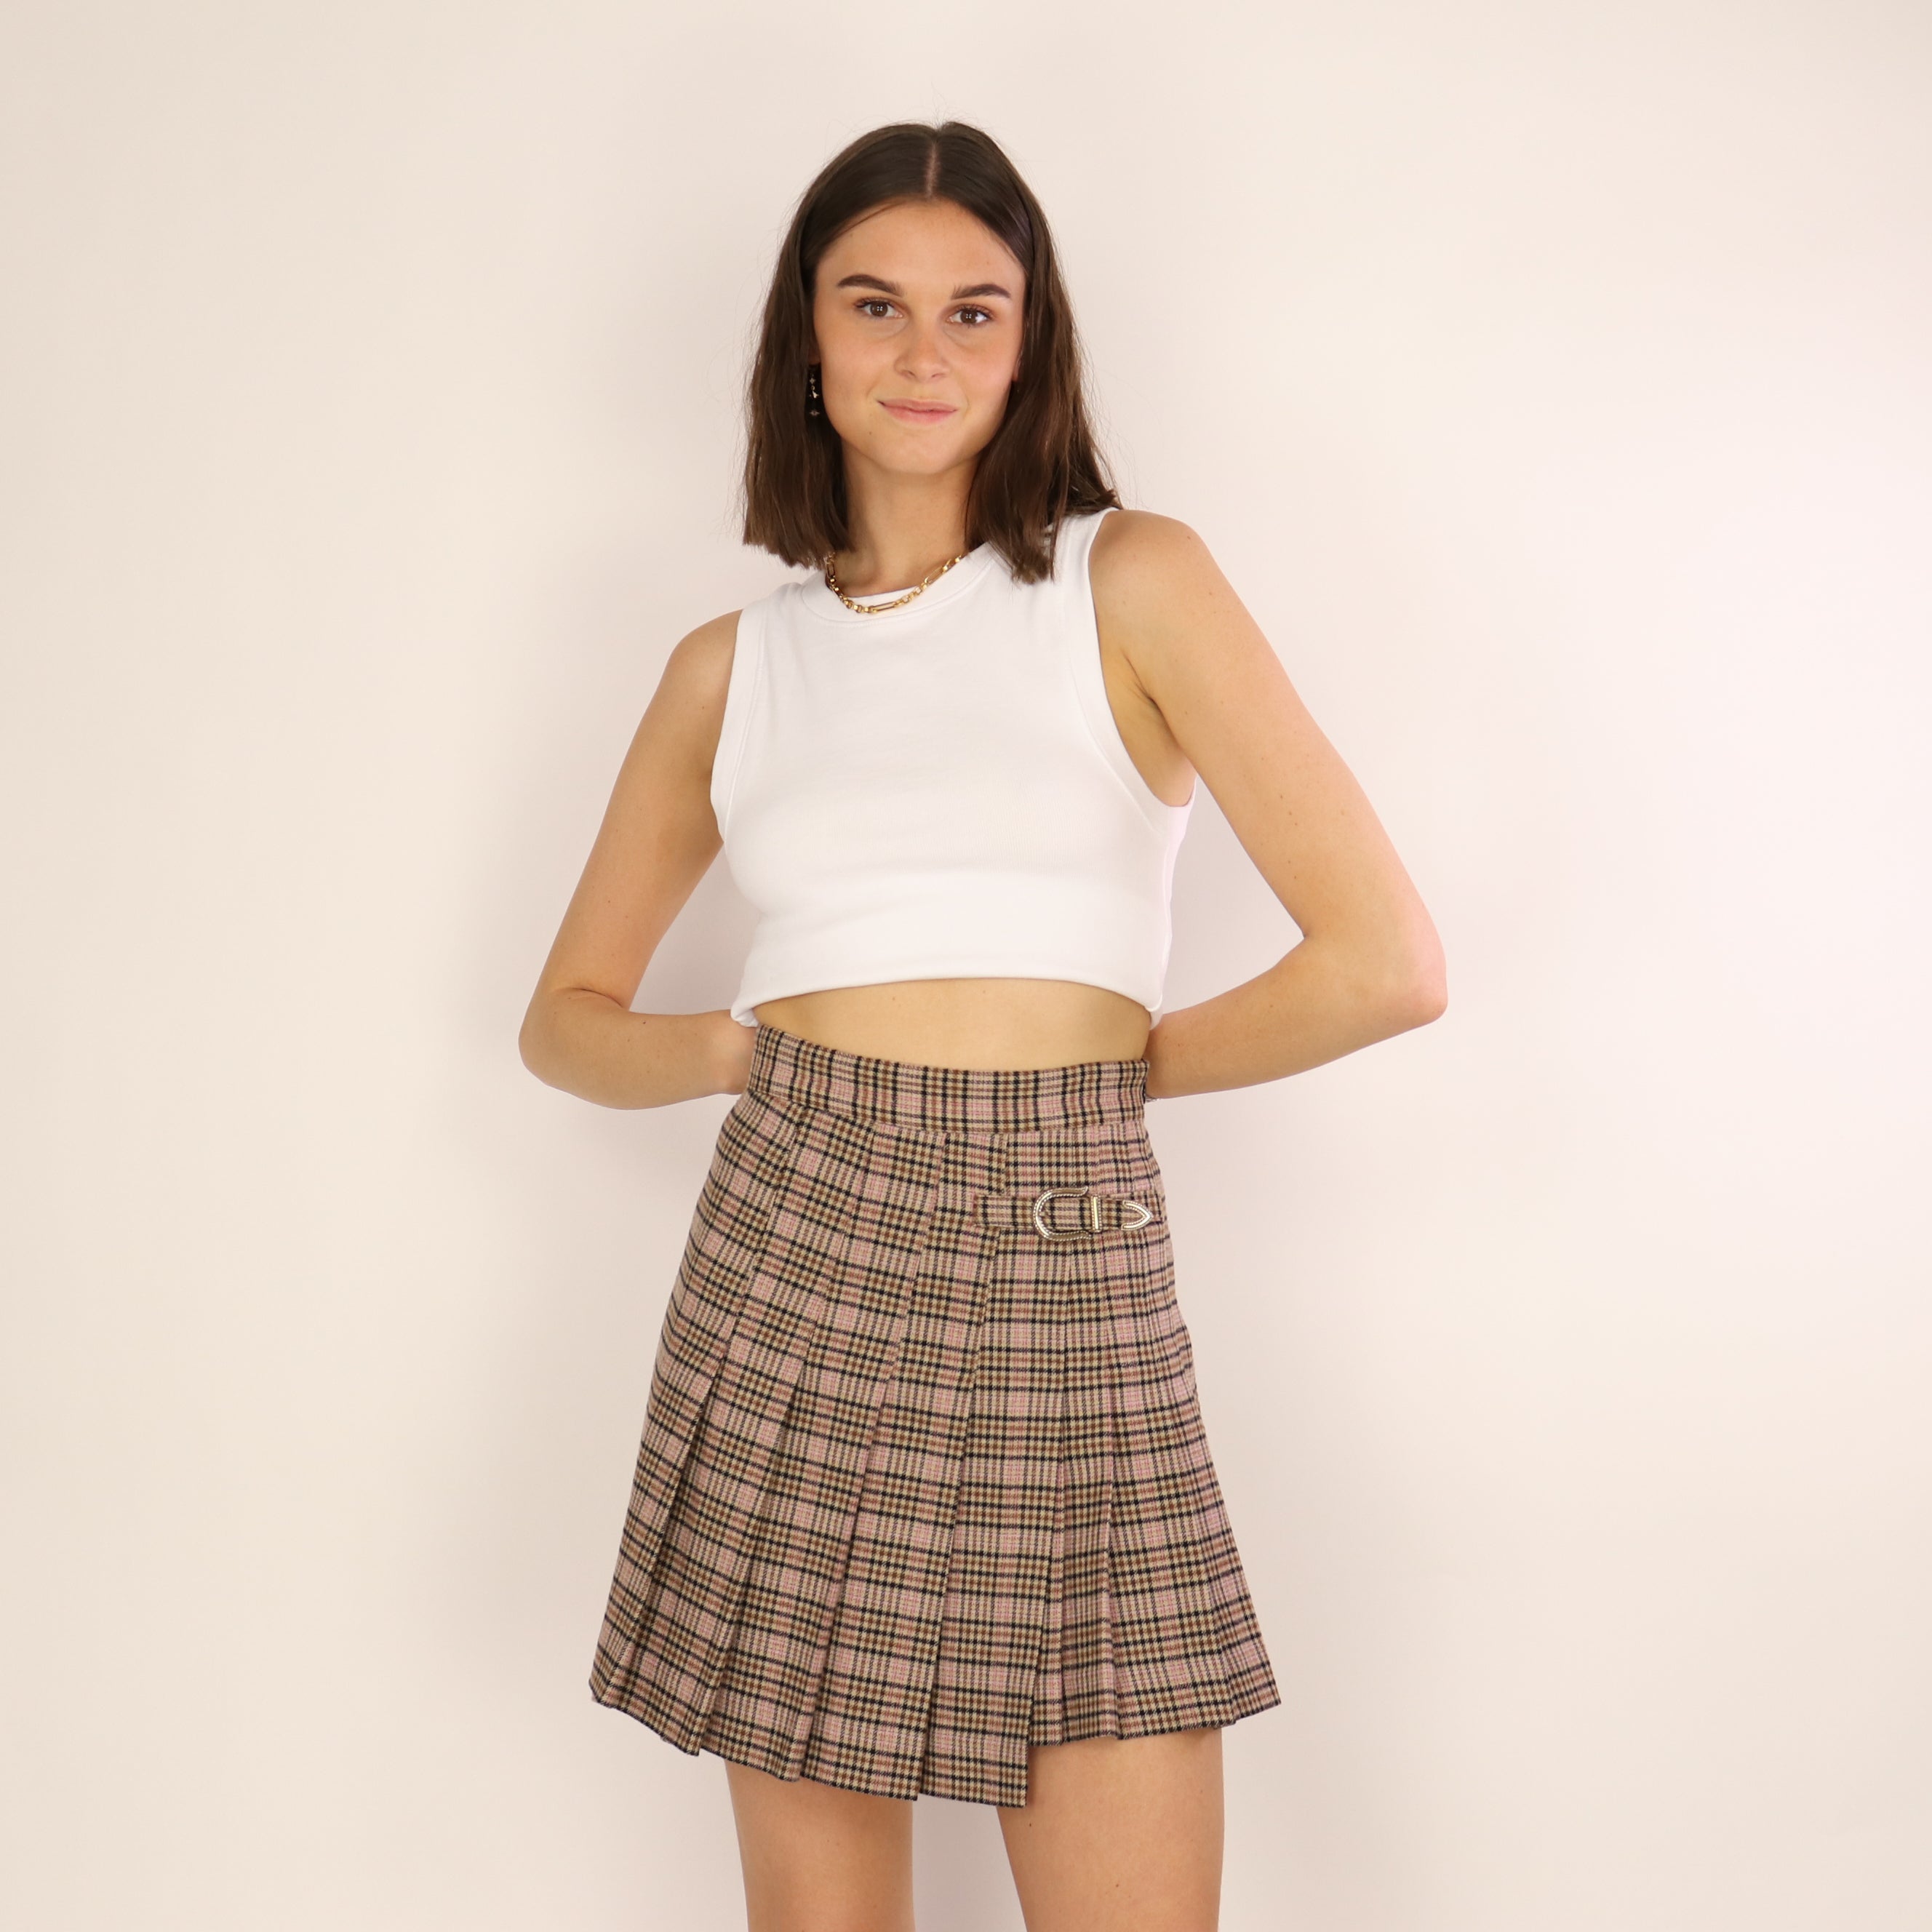 Skirt, Size 8